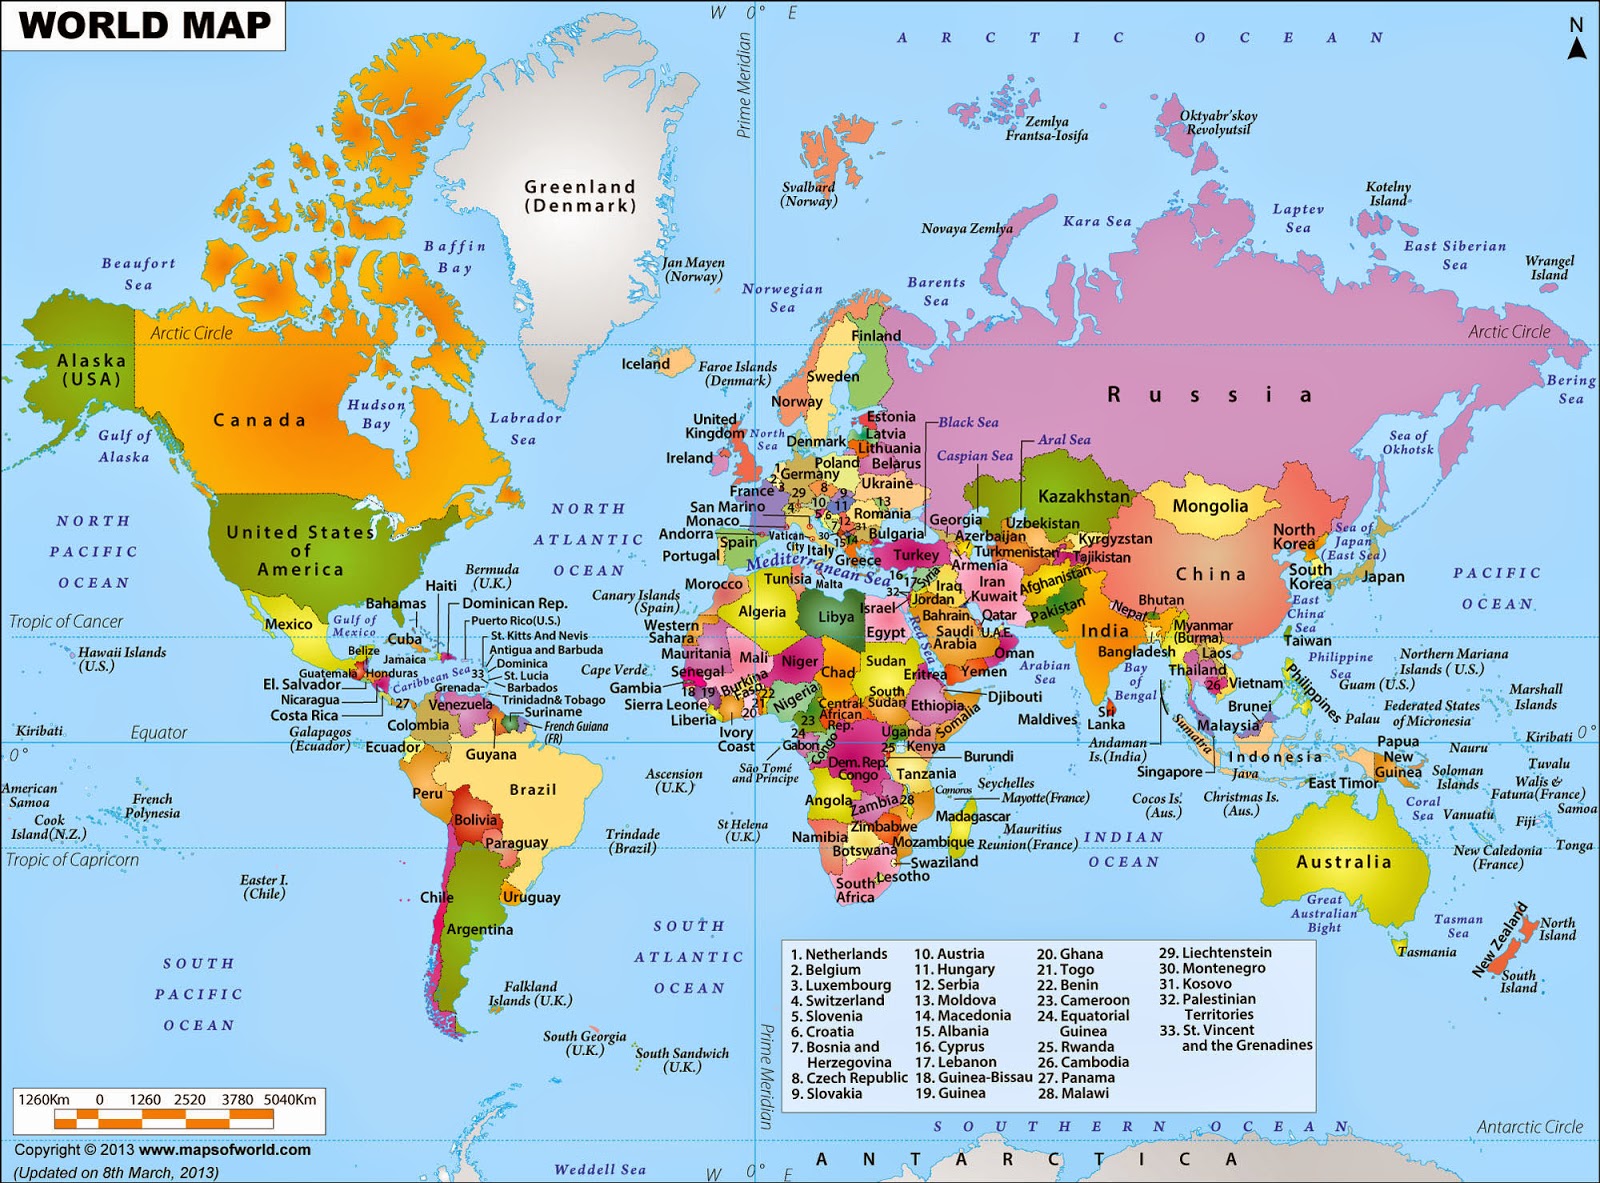 Peta Dunia  Paling Jelas high resolution Altovart Blog